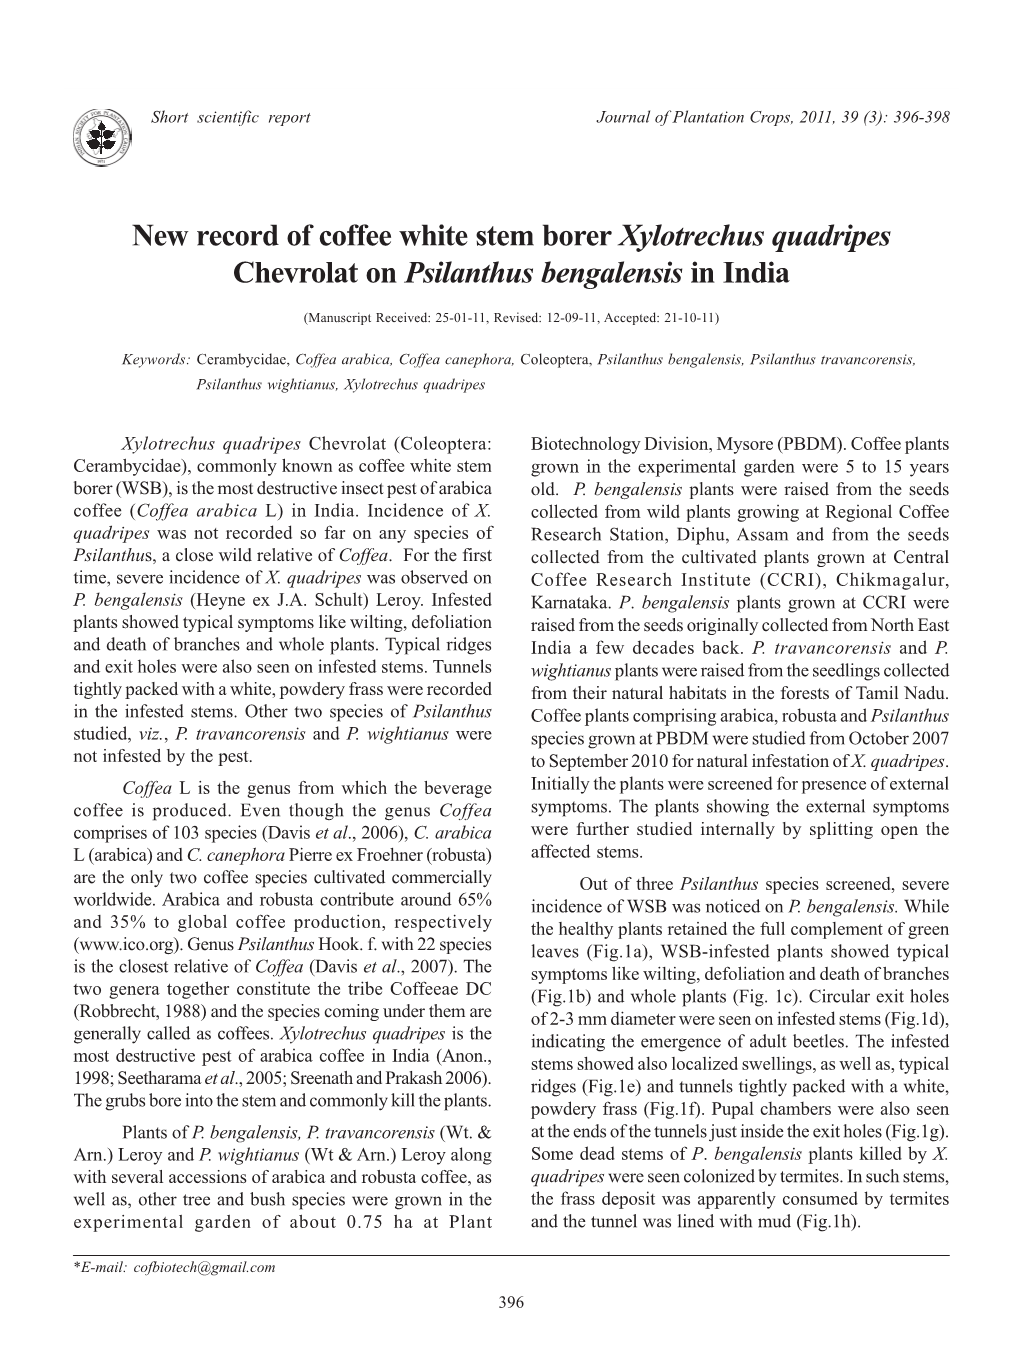 New Record of Coffee White Stem Borer Xylotrechus Quadripes Chevrolat on Psilanthus Bengalensis in India